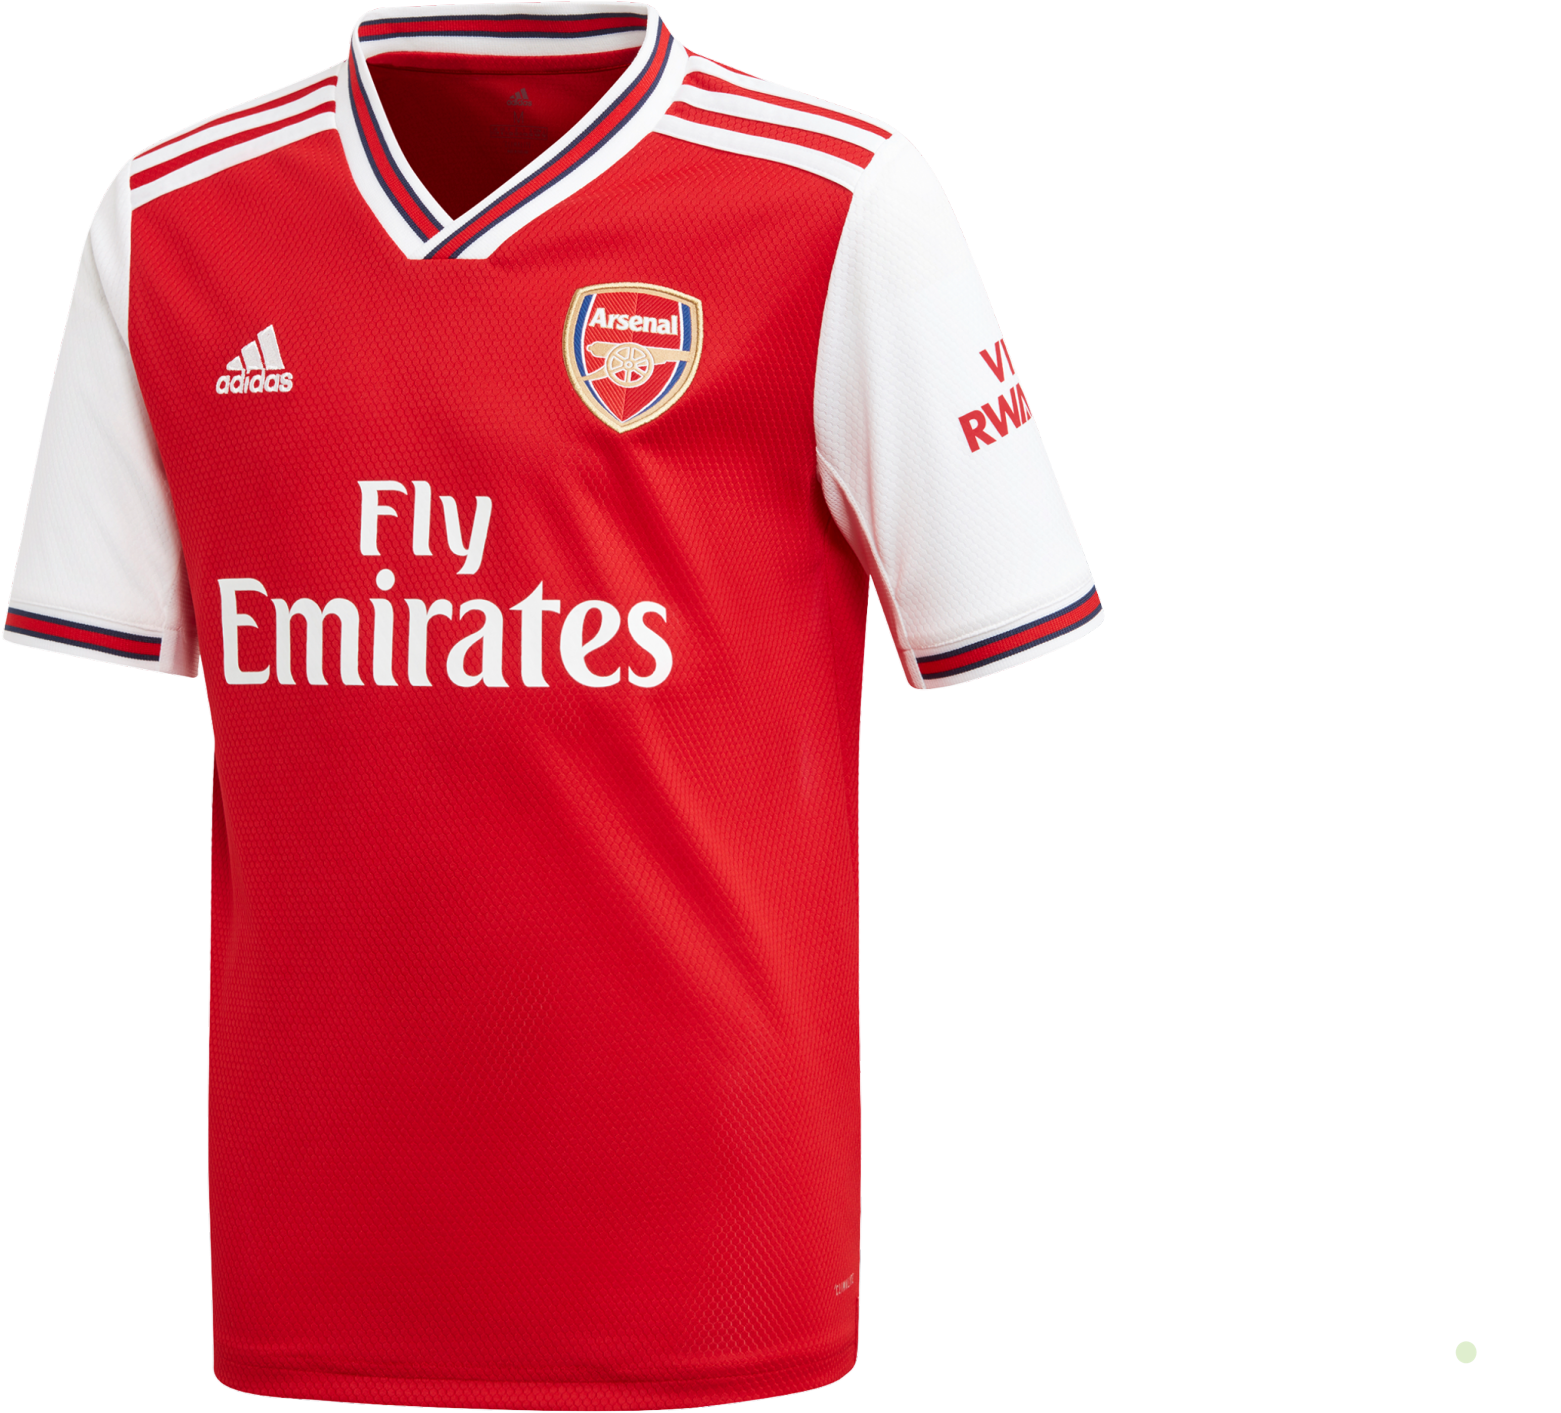 Arsenal Adidas Home Jersey Design PNG image